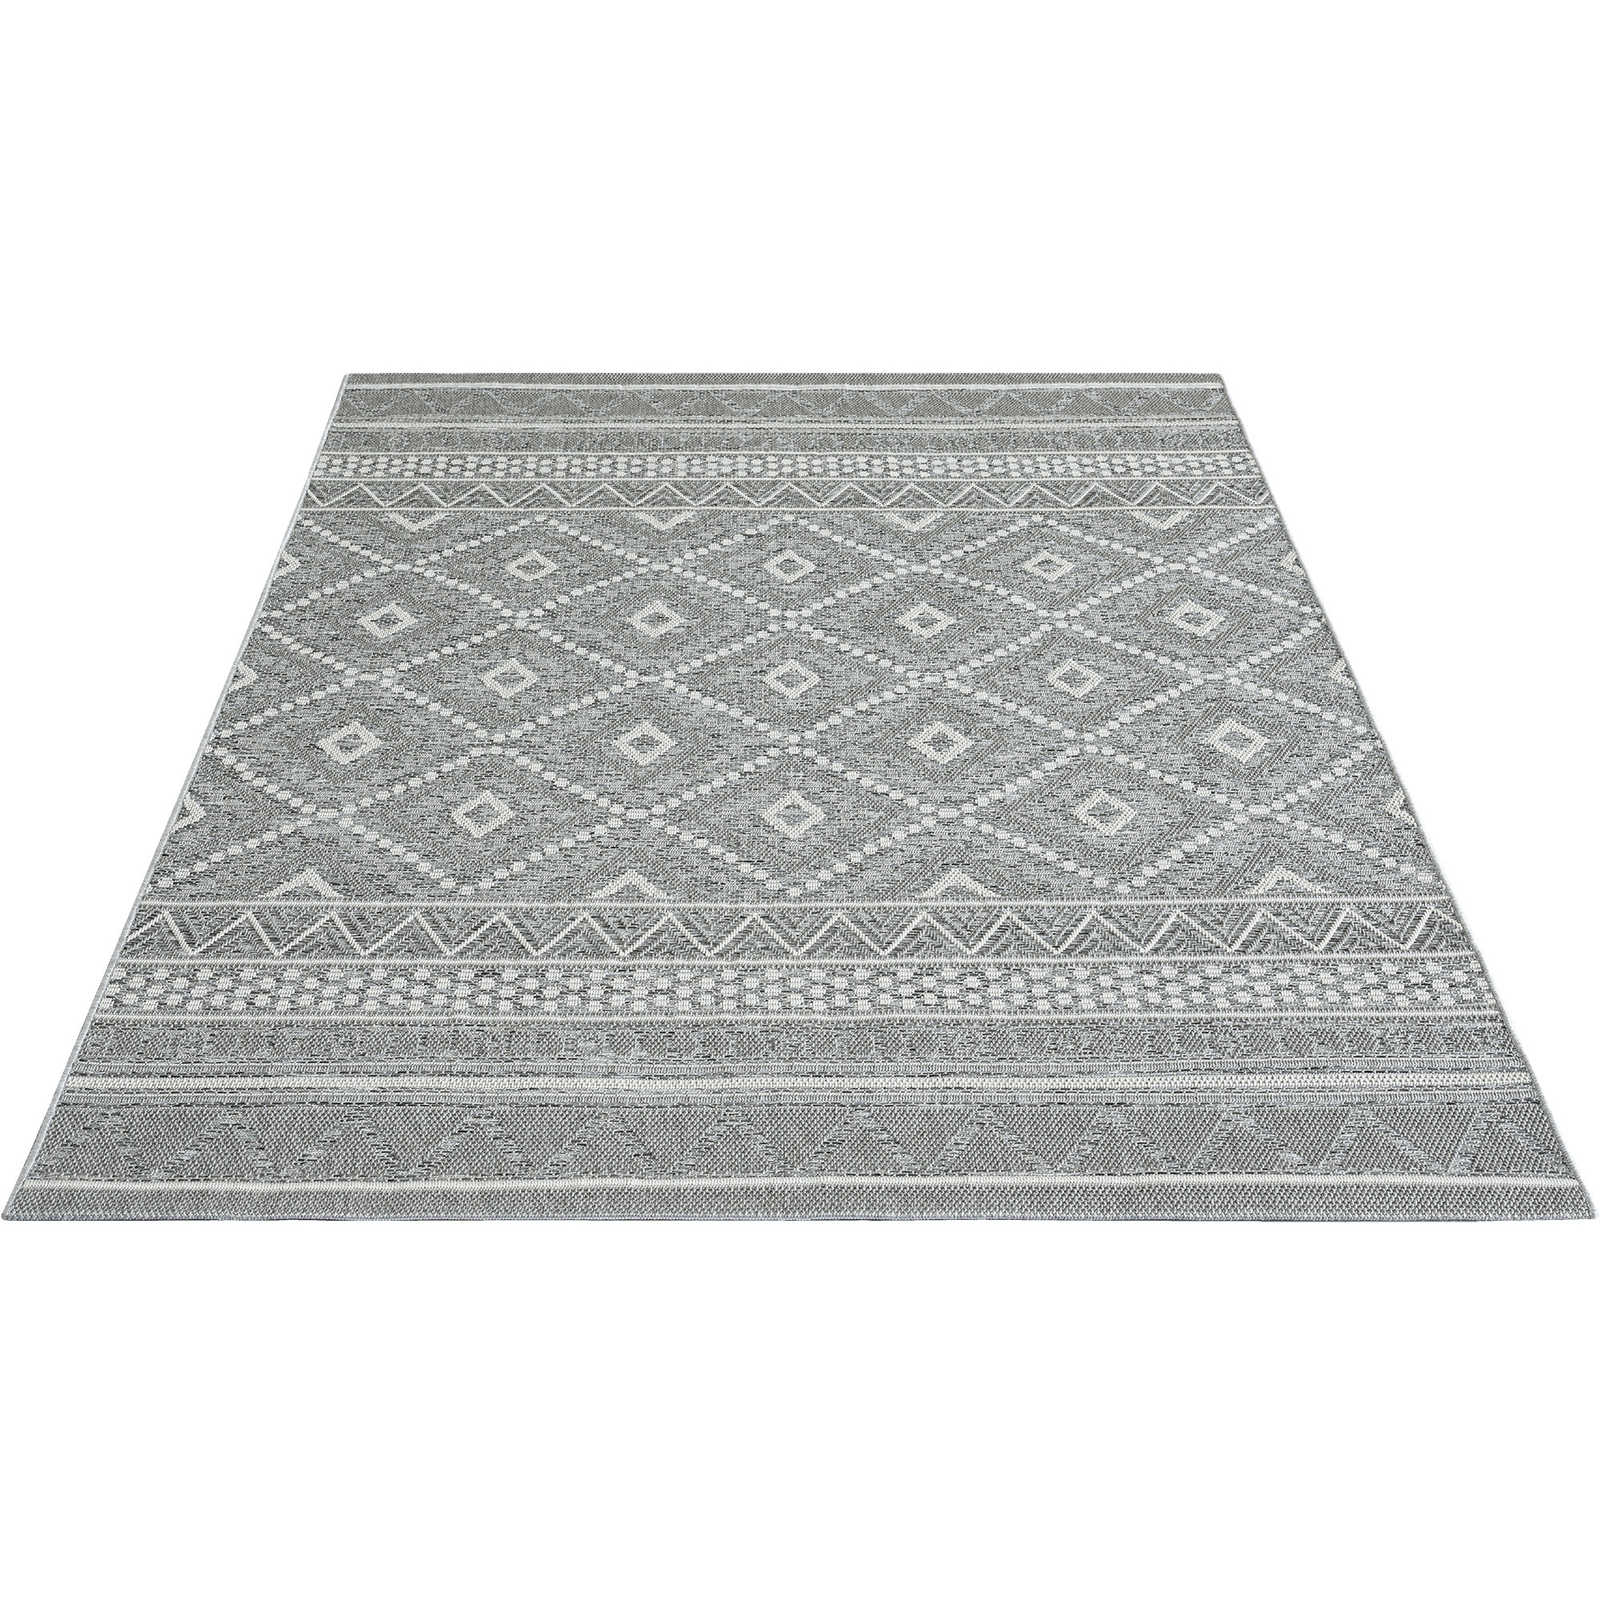 Bemusterter Outdoor Teppich in Grau – 280 x 200 cm
